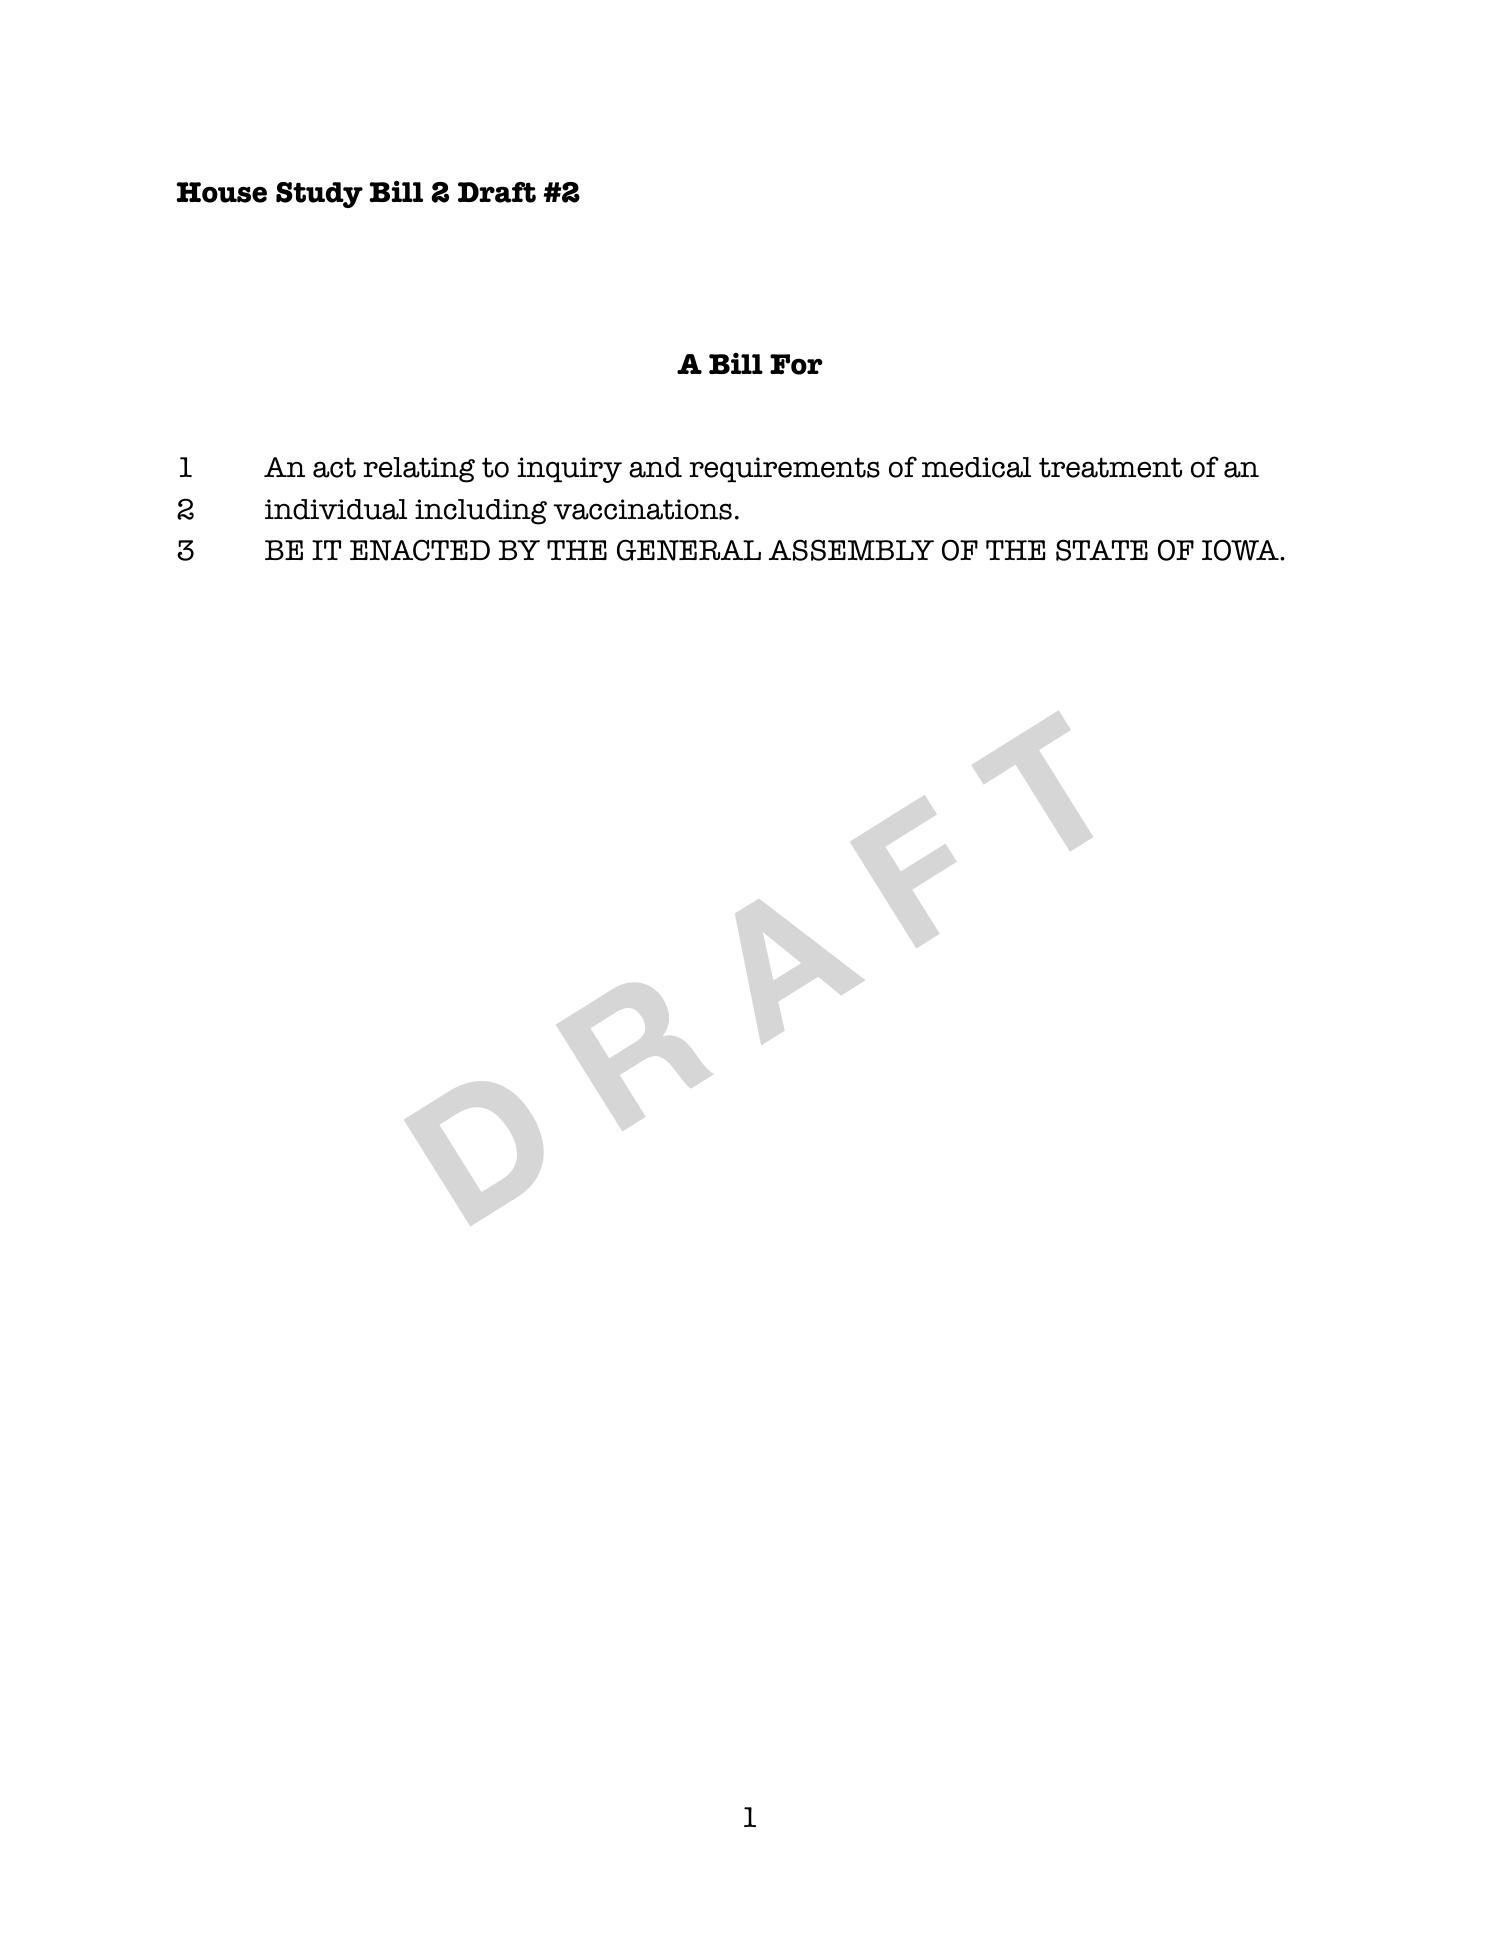 House Study Bill 2 Draft 4 PDF.pdf DocDroid